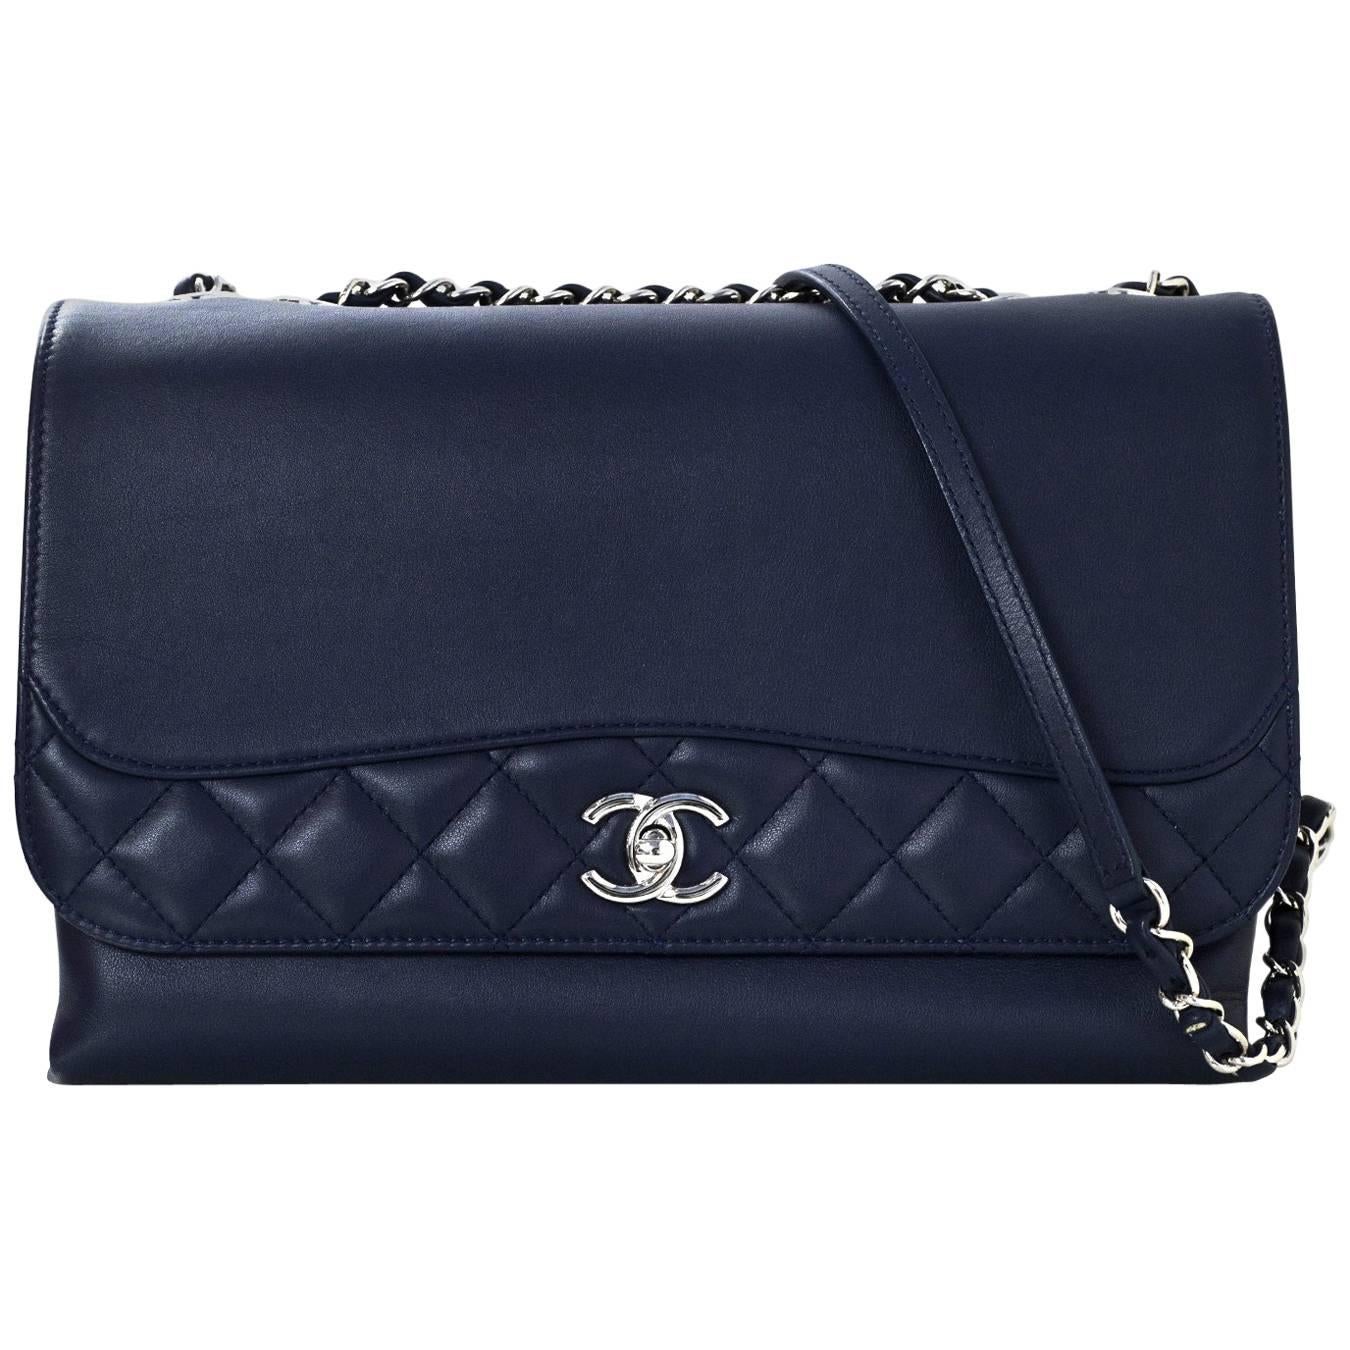 Chanel 2016 Blue Smooth & Quilted Leather Shoulder Bag